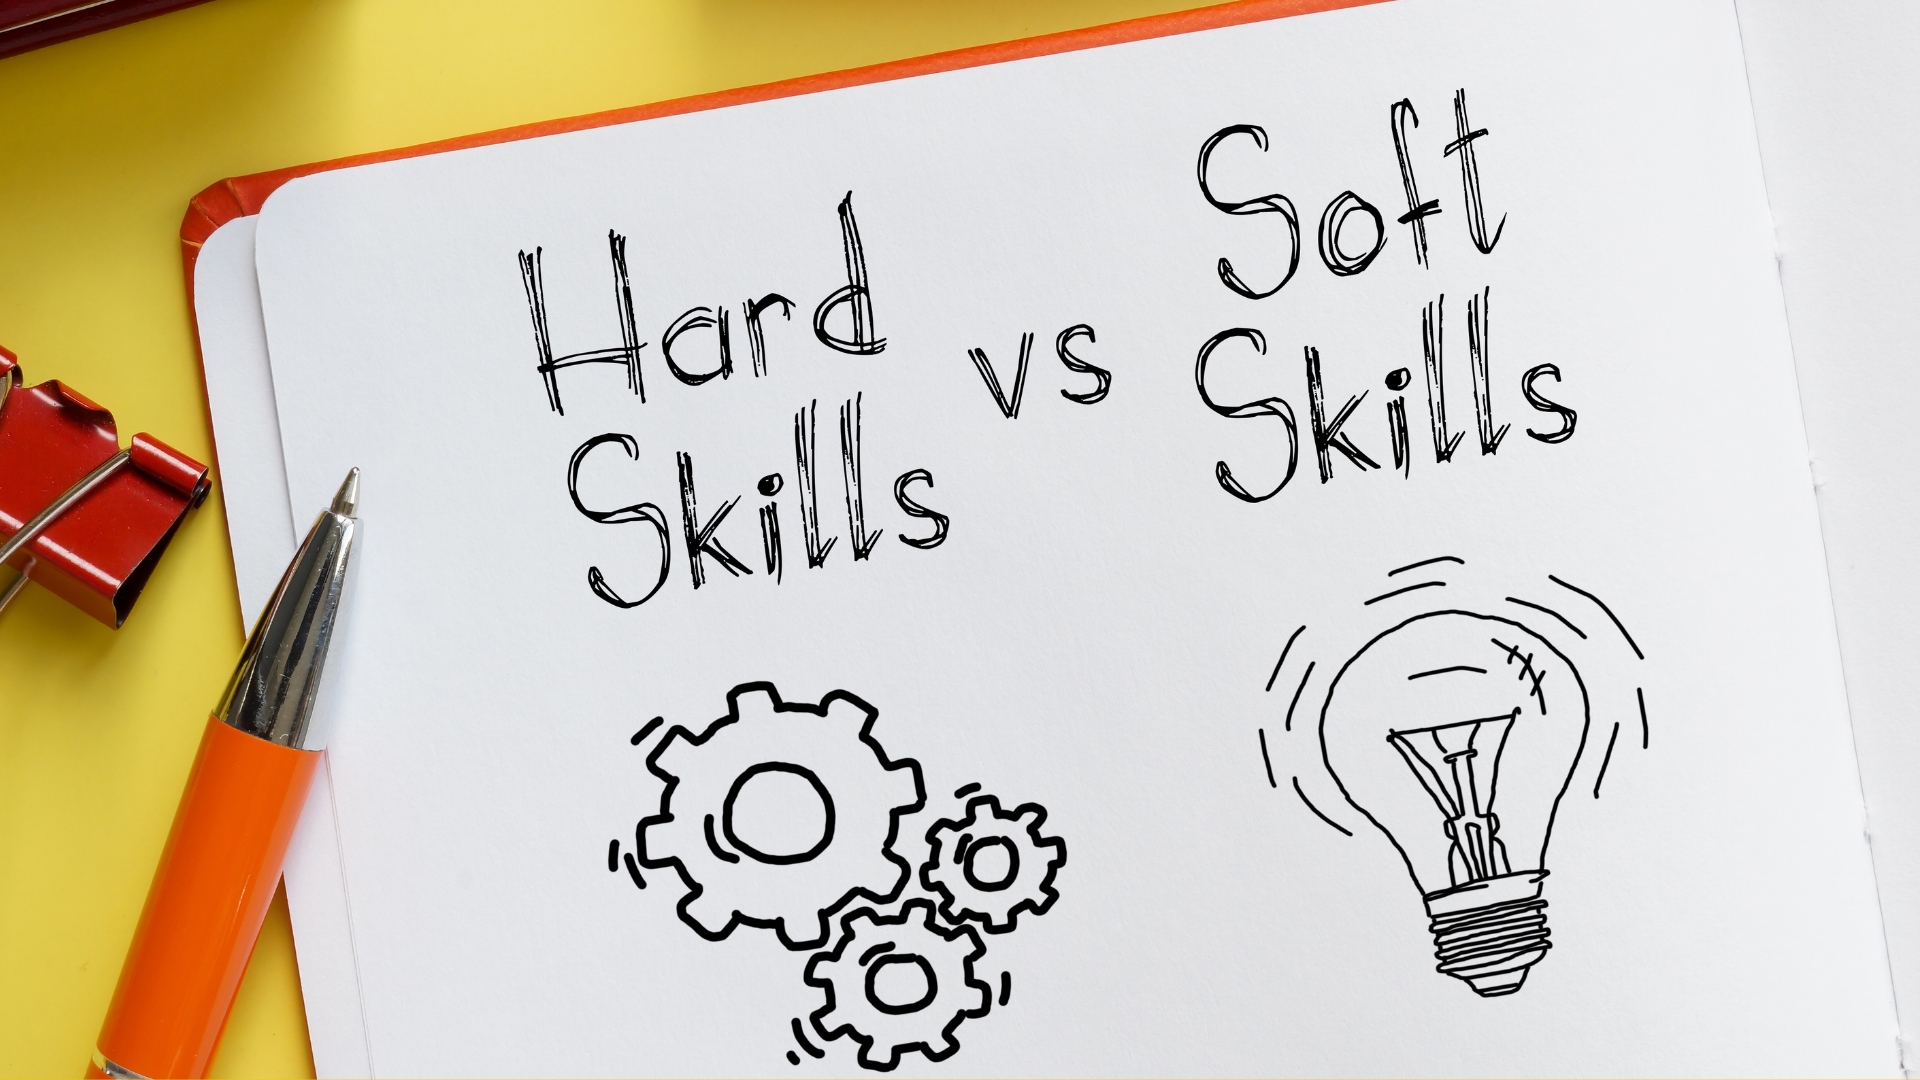 Notebook with 'Hard Skills vs Soft Skills' written, accompanied by a cog symbolizing hard skills and a light bulb symbolizing soft skills.